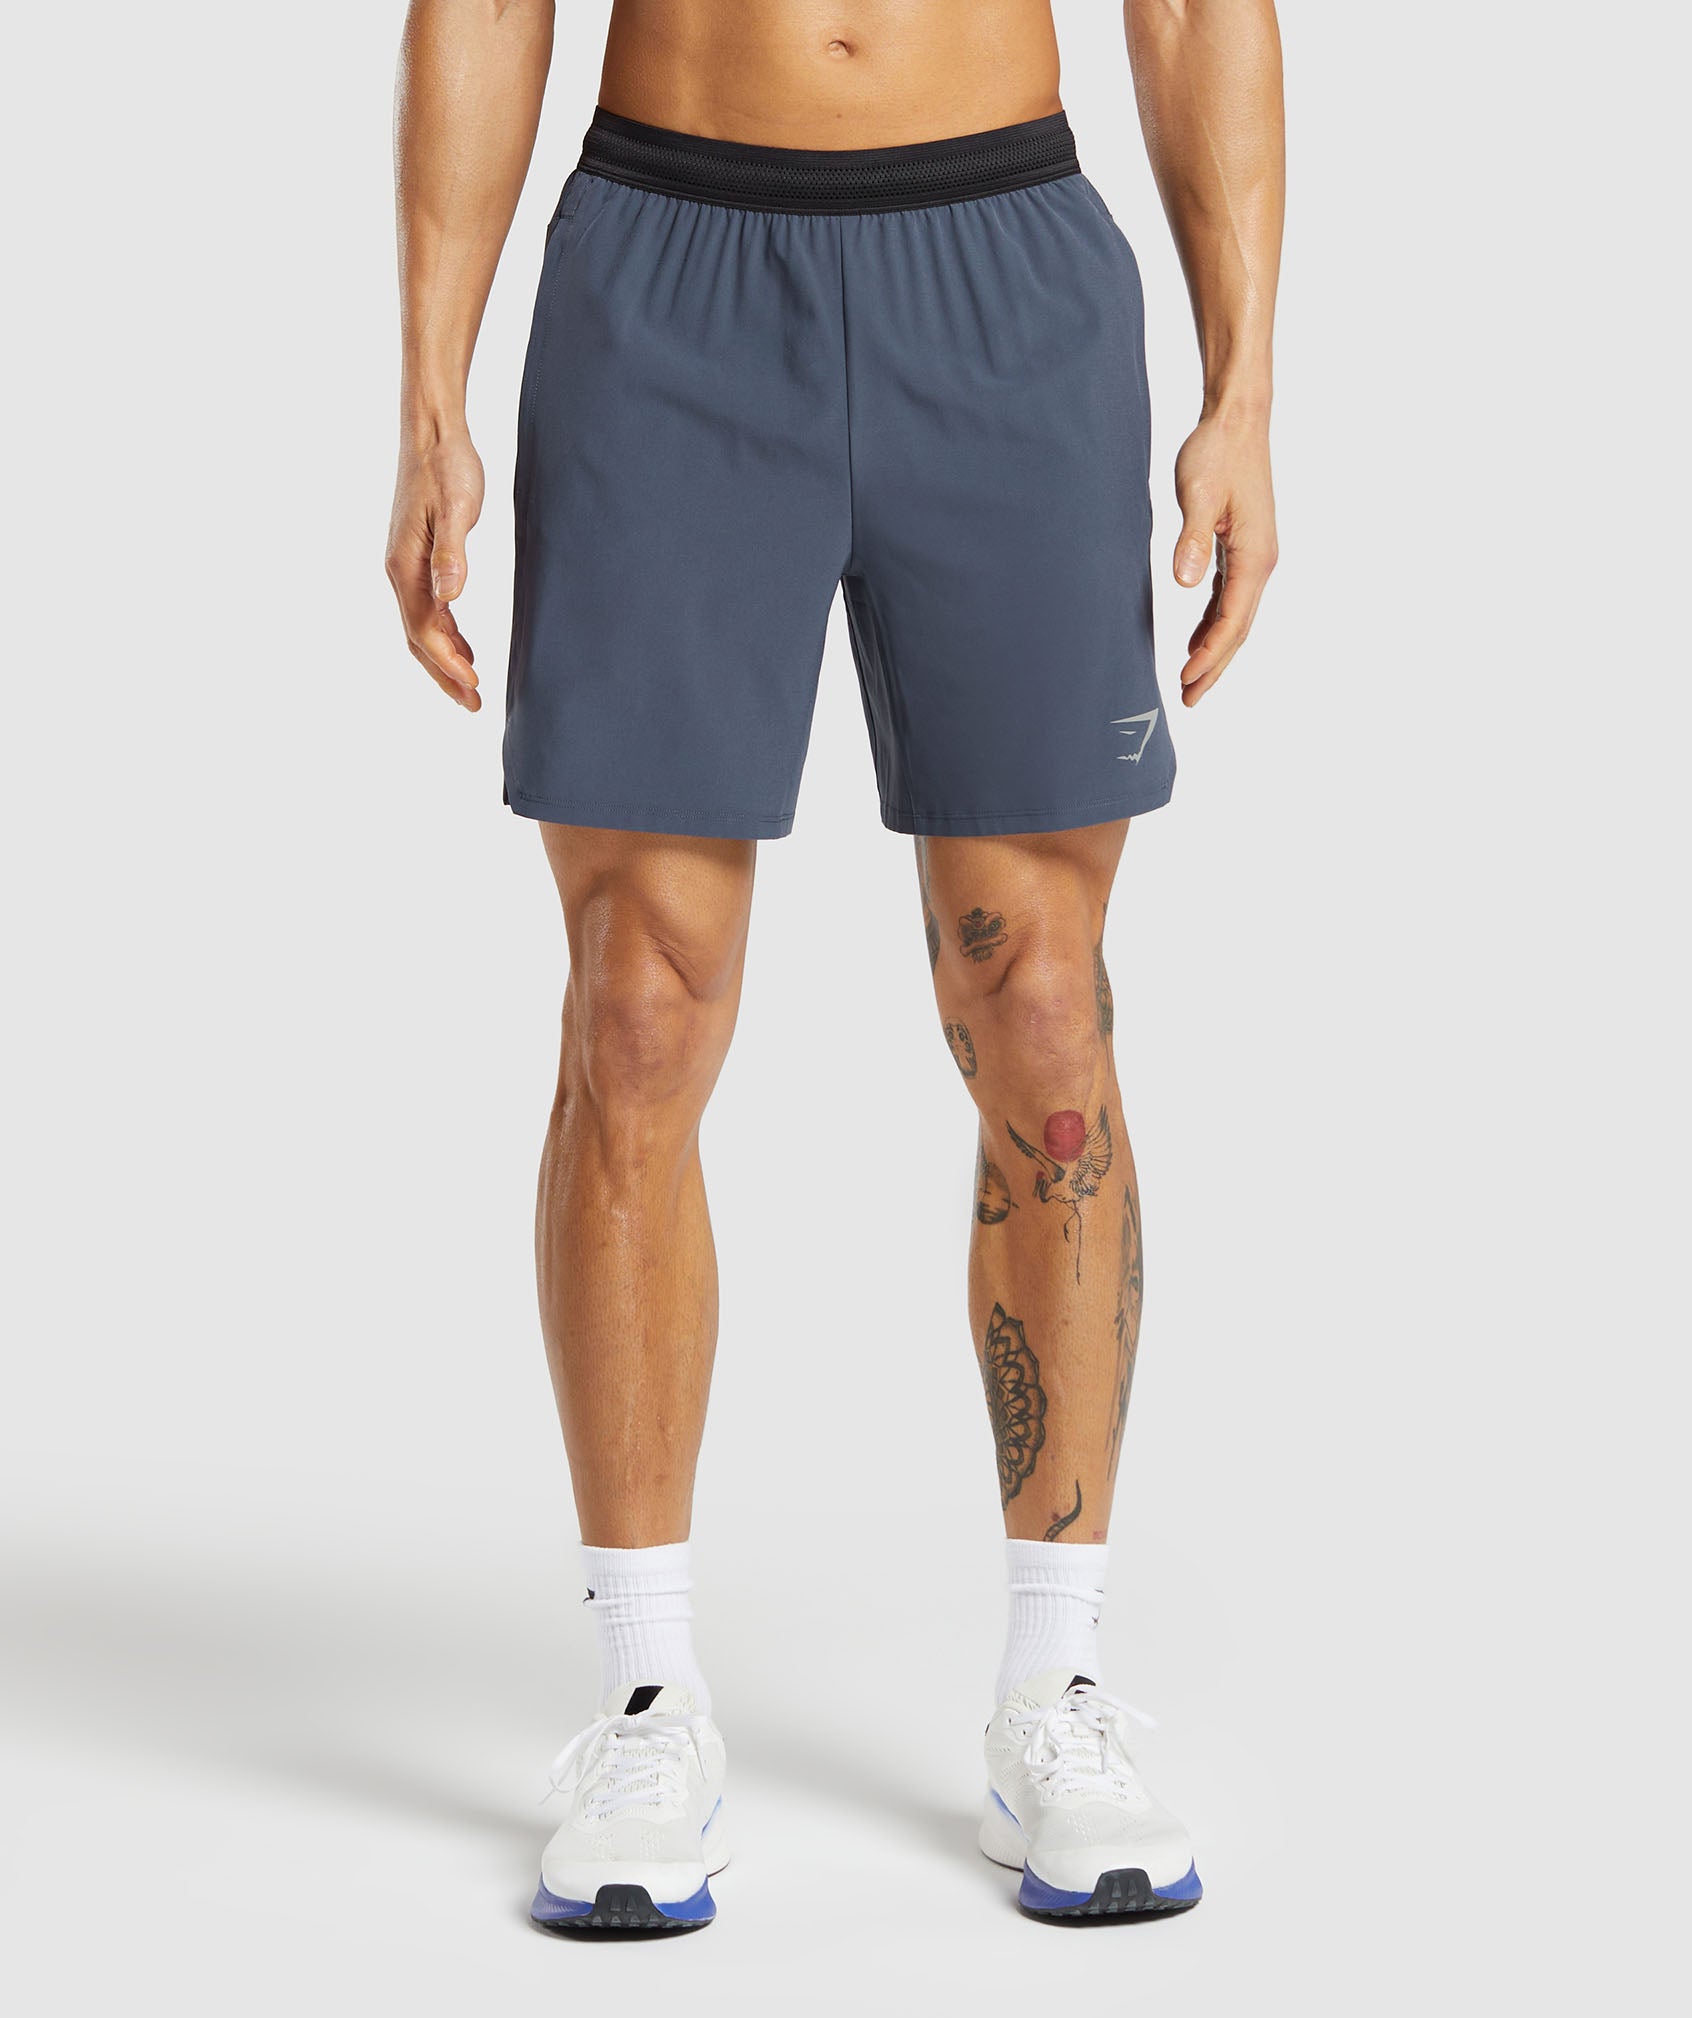 Speed 7" Shorts in Titanium Blue - view 1